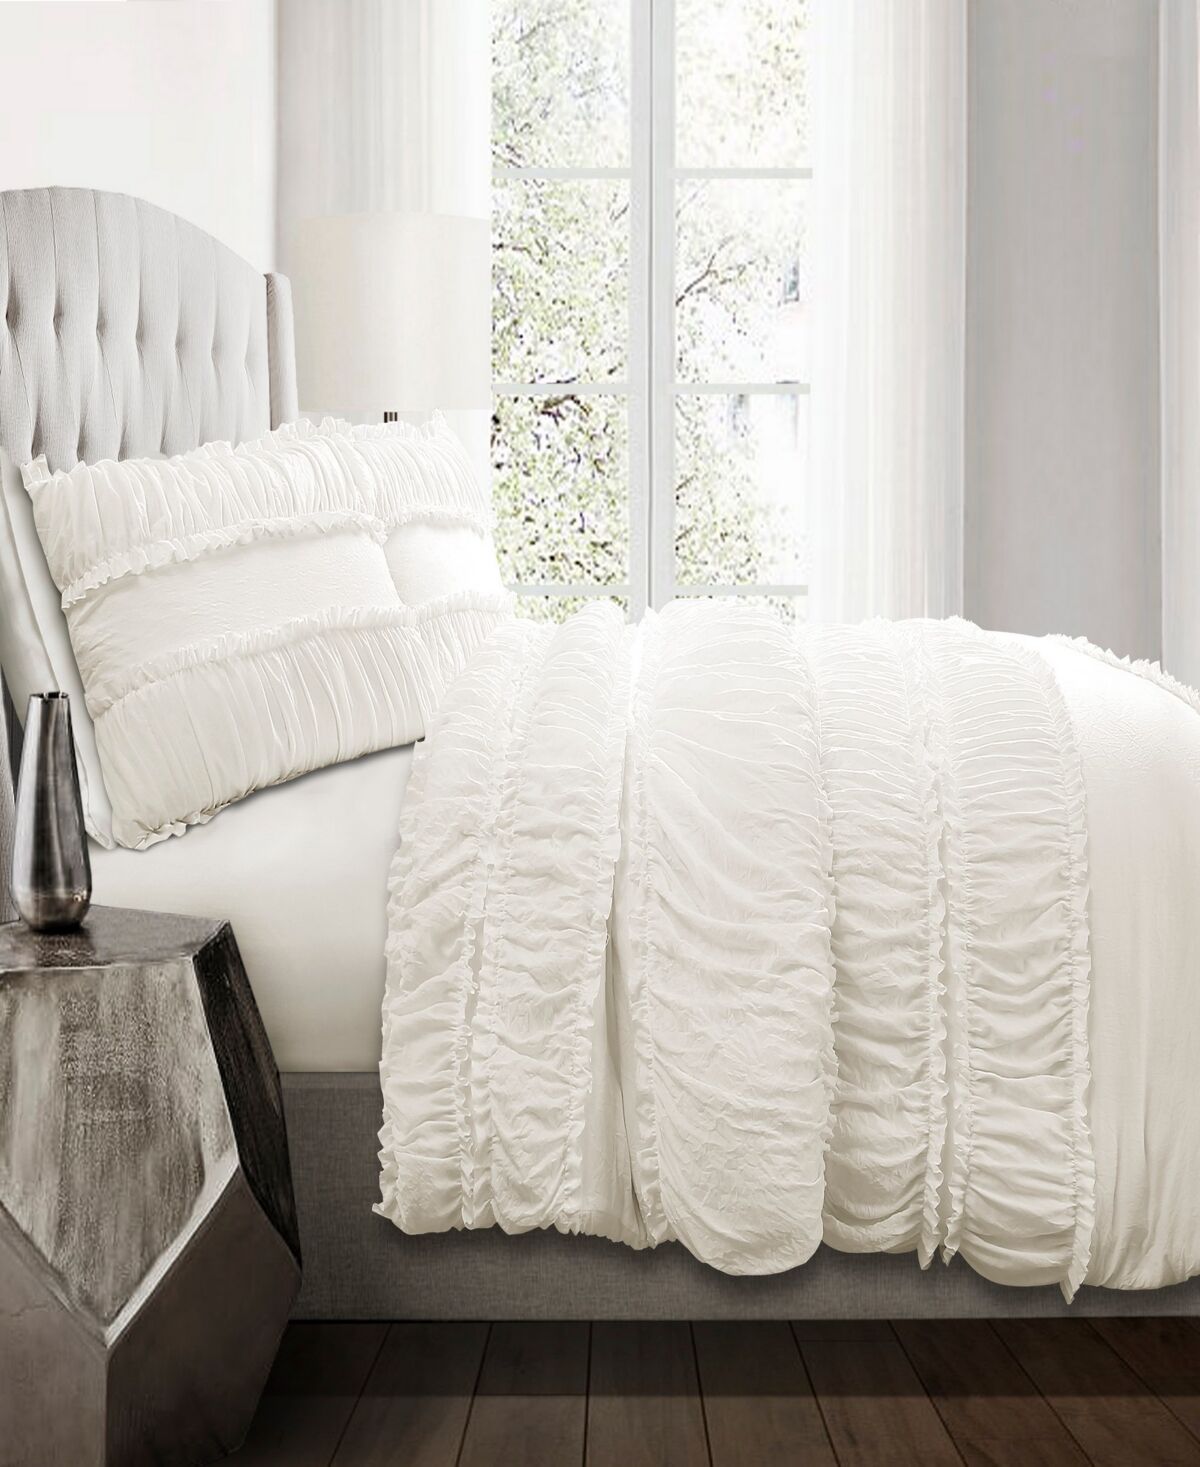 Lush Decor Nova Ruffle 3Pc King Comforter Set - White